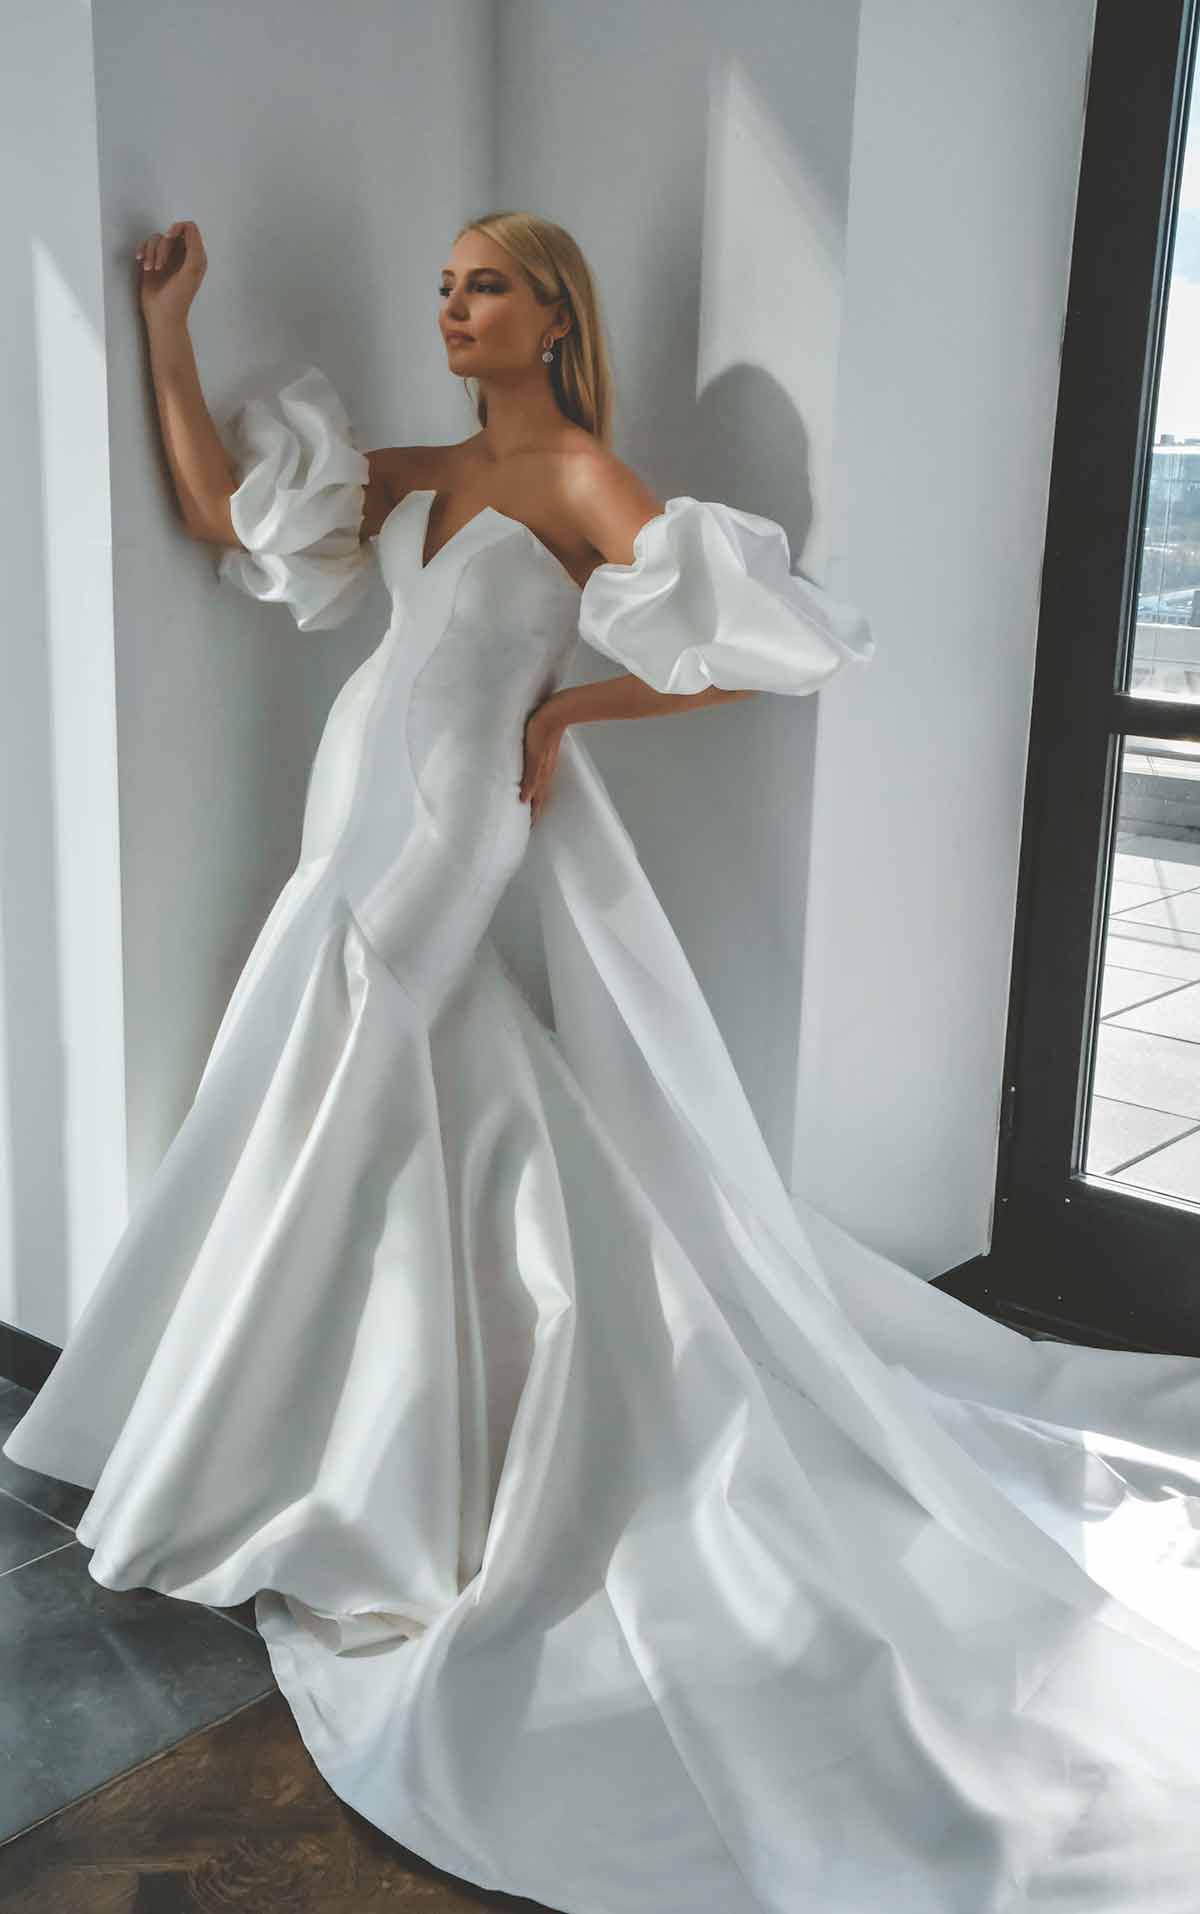 1266 Sleek and Modern Mermaid Wedding Gown with Puffed Sleeves by Martina Liana